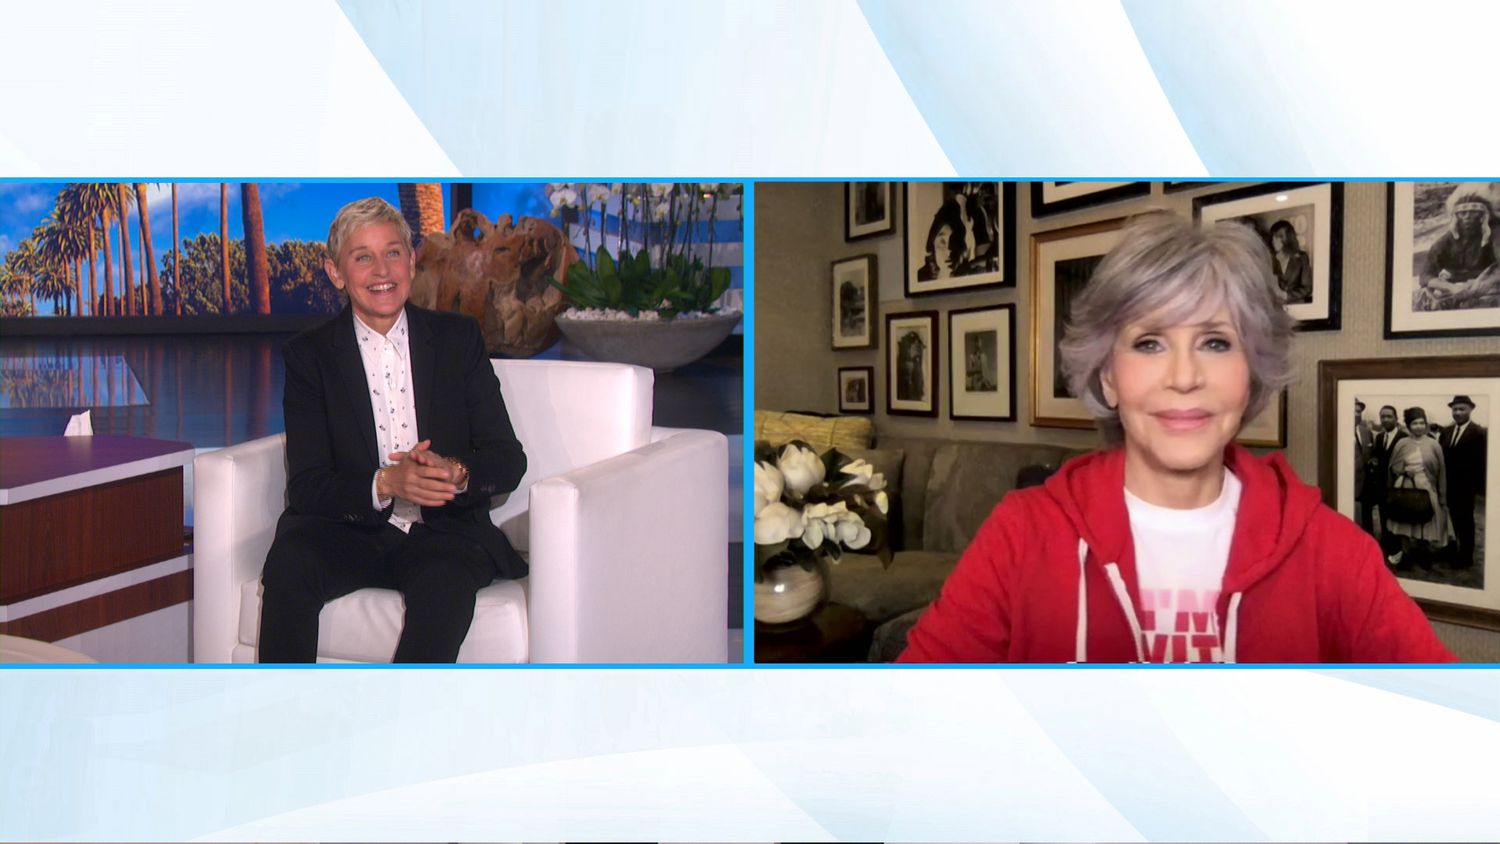 Hollywood legend Jane Fonda makes an appearance on &ldquo;The Ellen DeGeneres Show&rdquo; via video chat airing Thursday, February 25th.